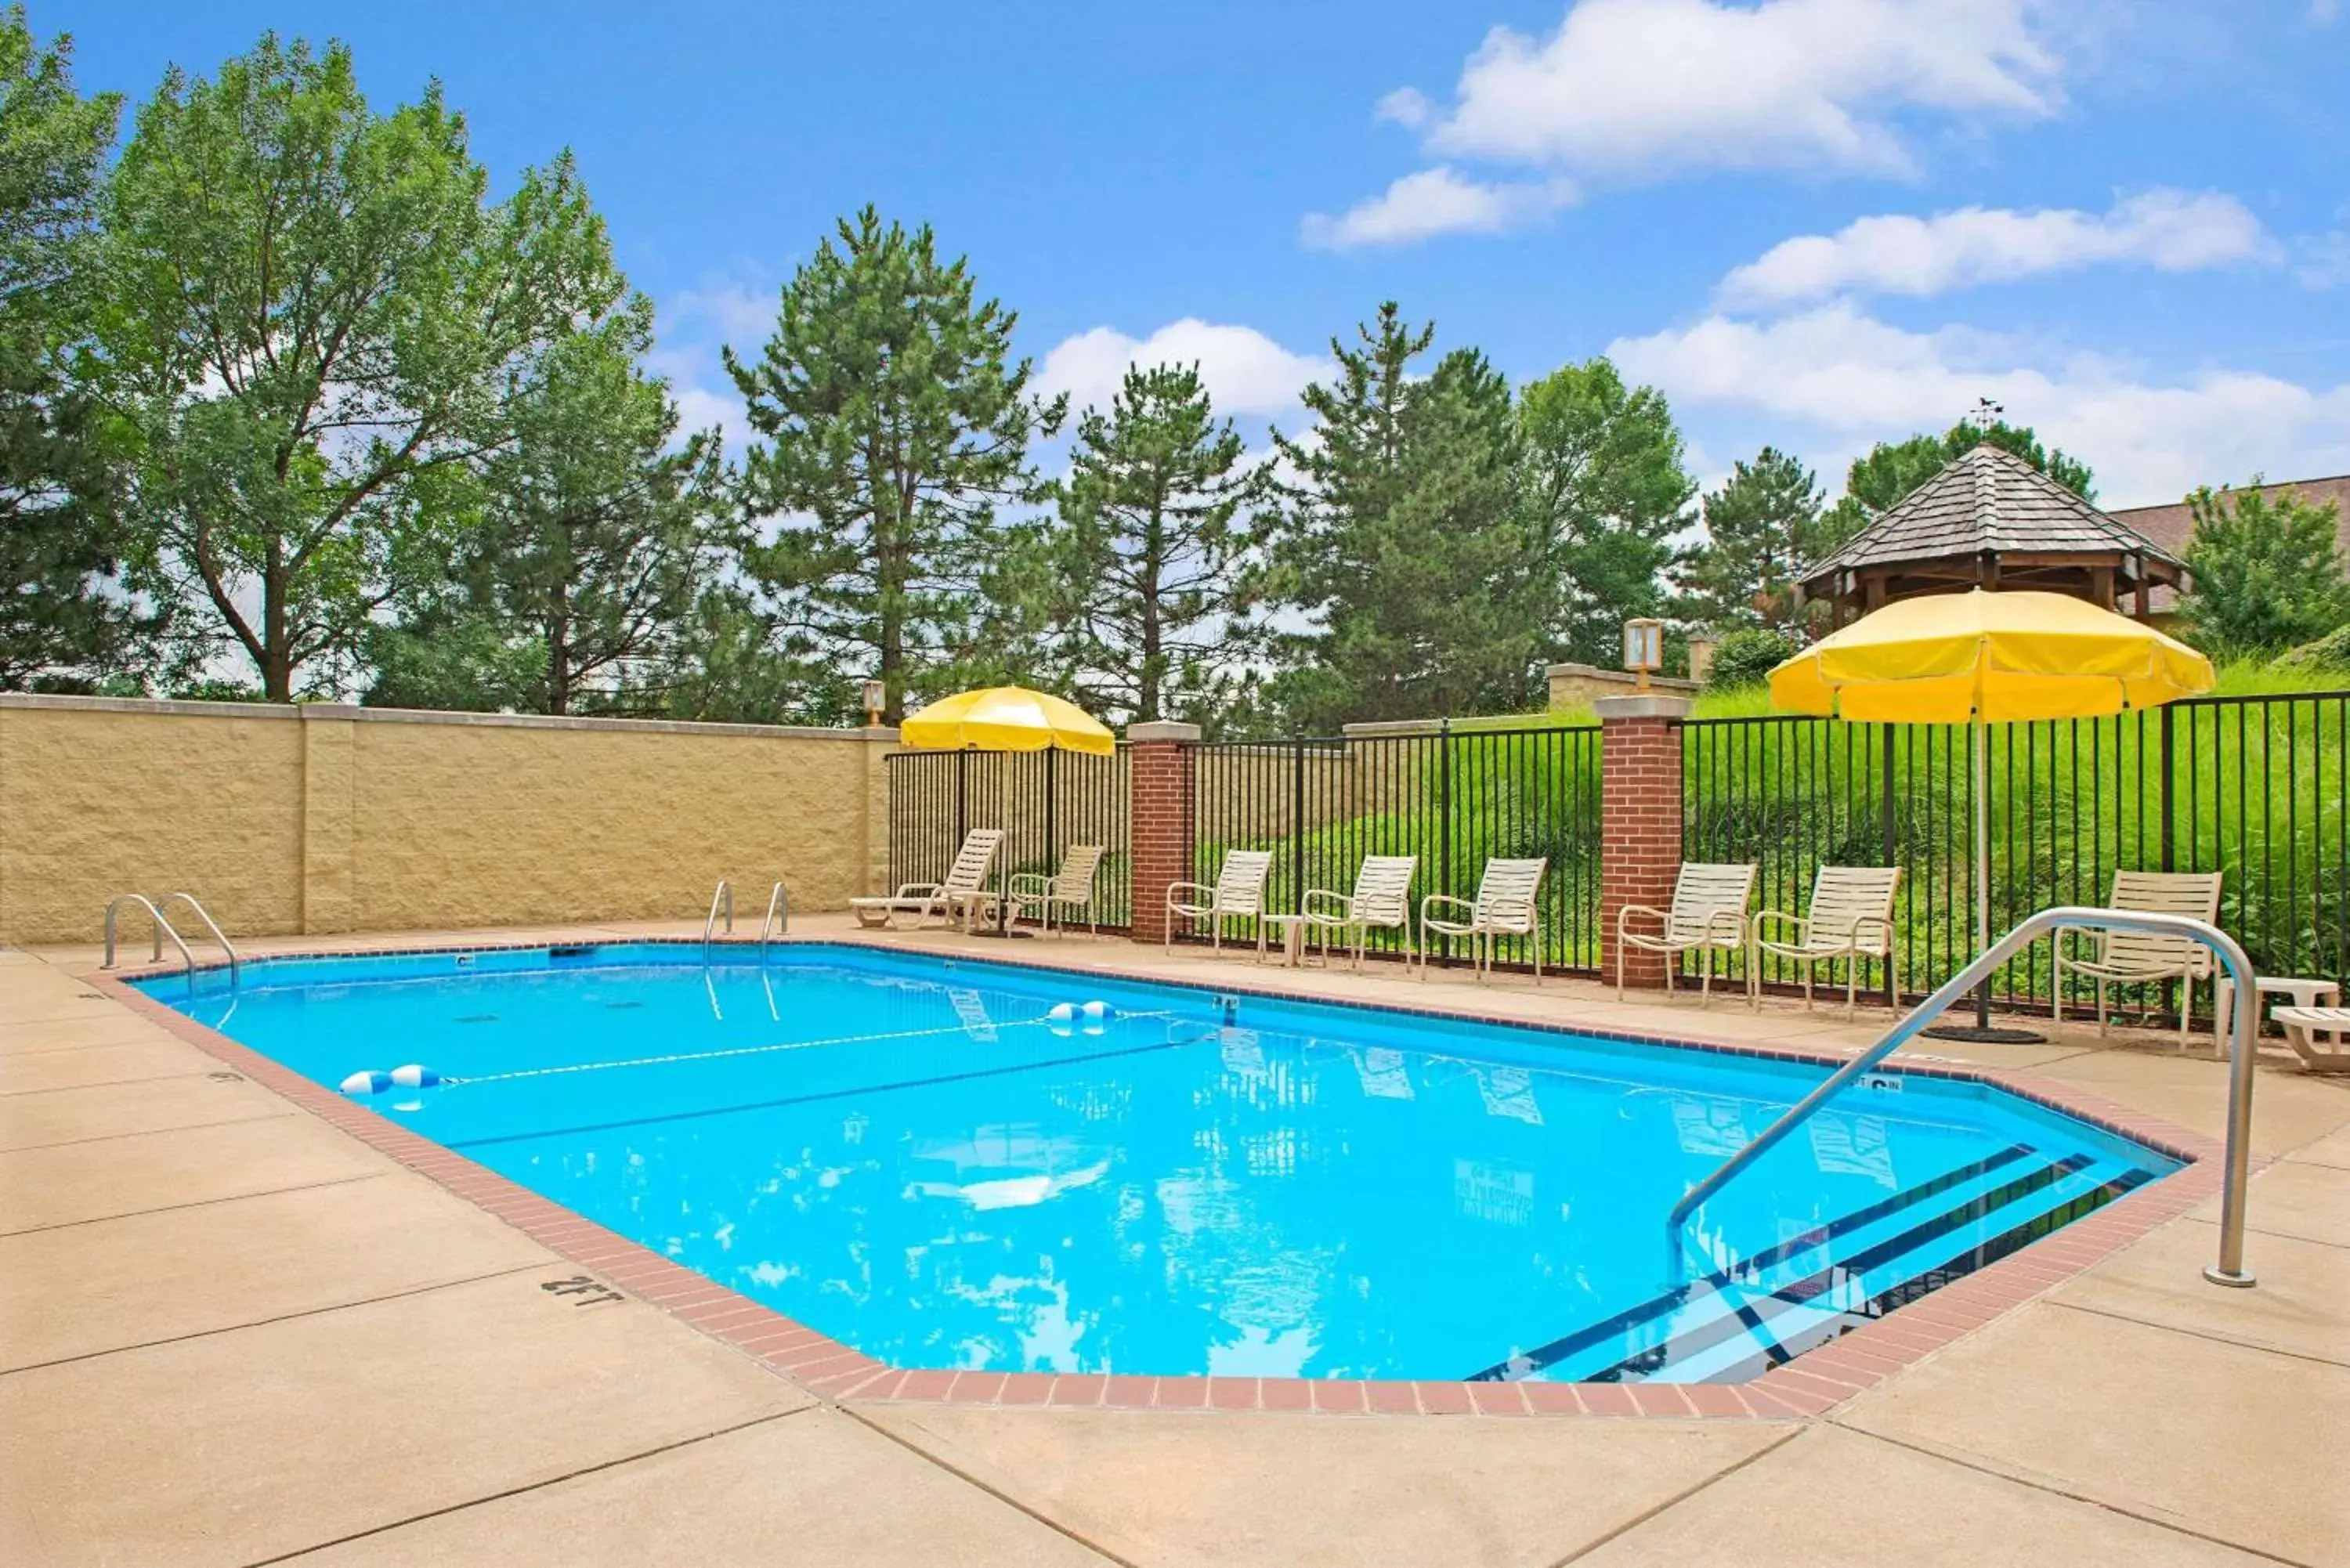 On site, Swimming Pool in Days Inn by Wyndham St. Louis/Westport MO